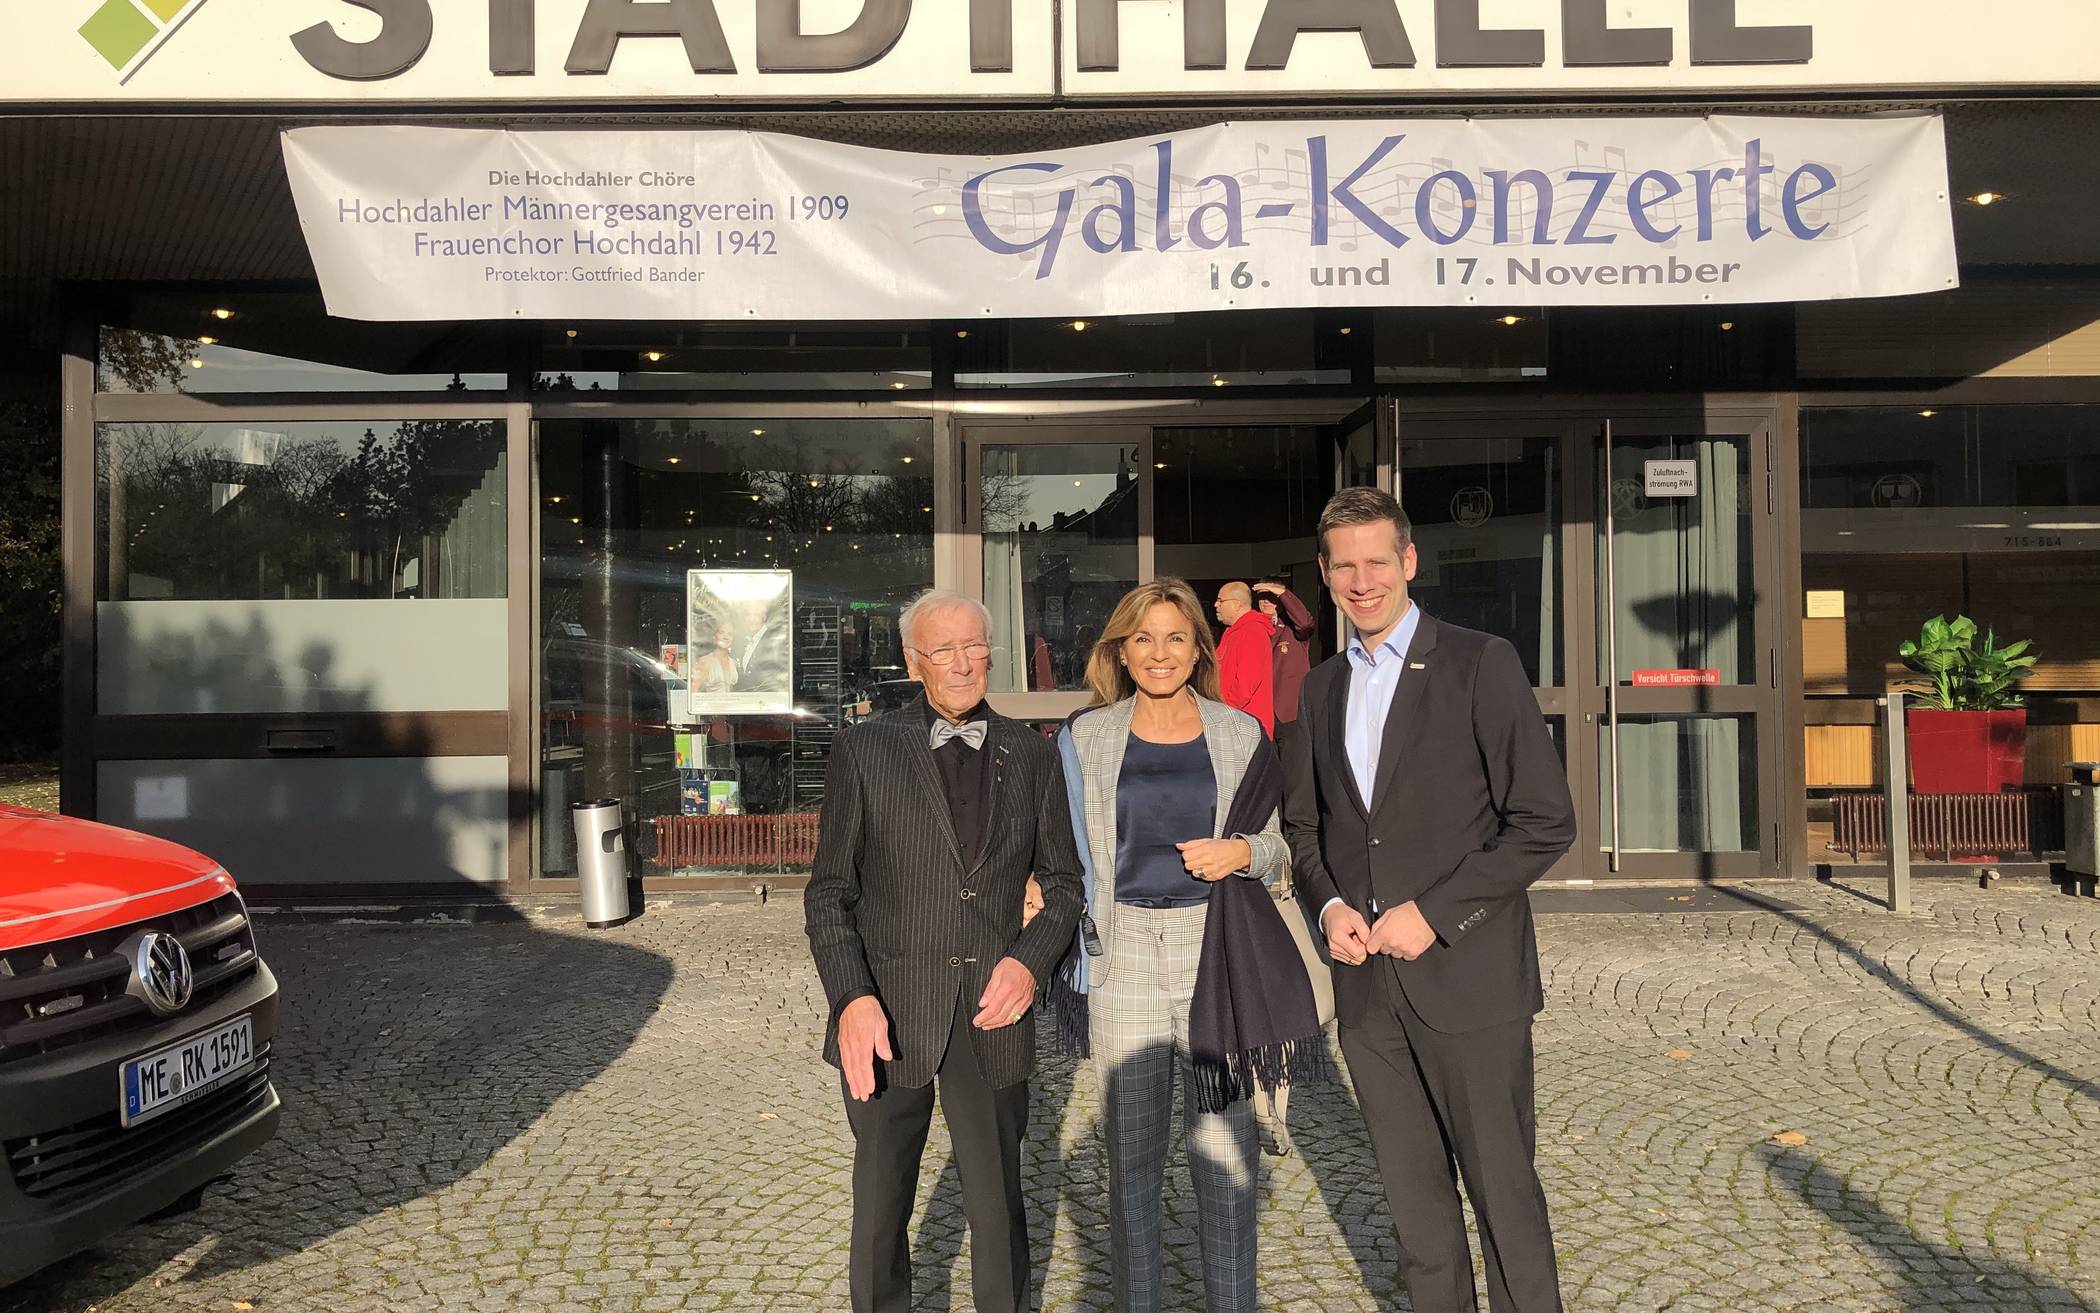  Detmar von Foerster, Michaela Noll MdB, Bürgermeister Christoph Schultz (v.li.) beim Galakonzert der Hochdahler Chöre. 